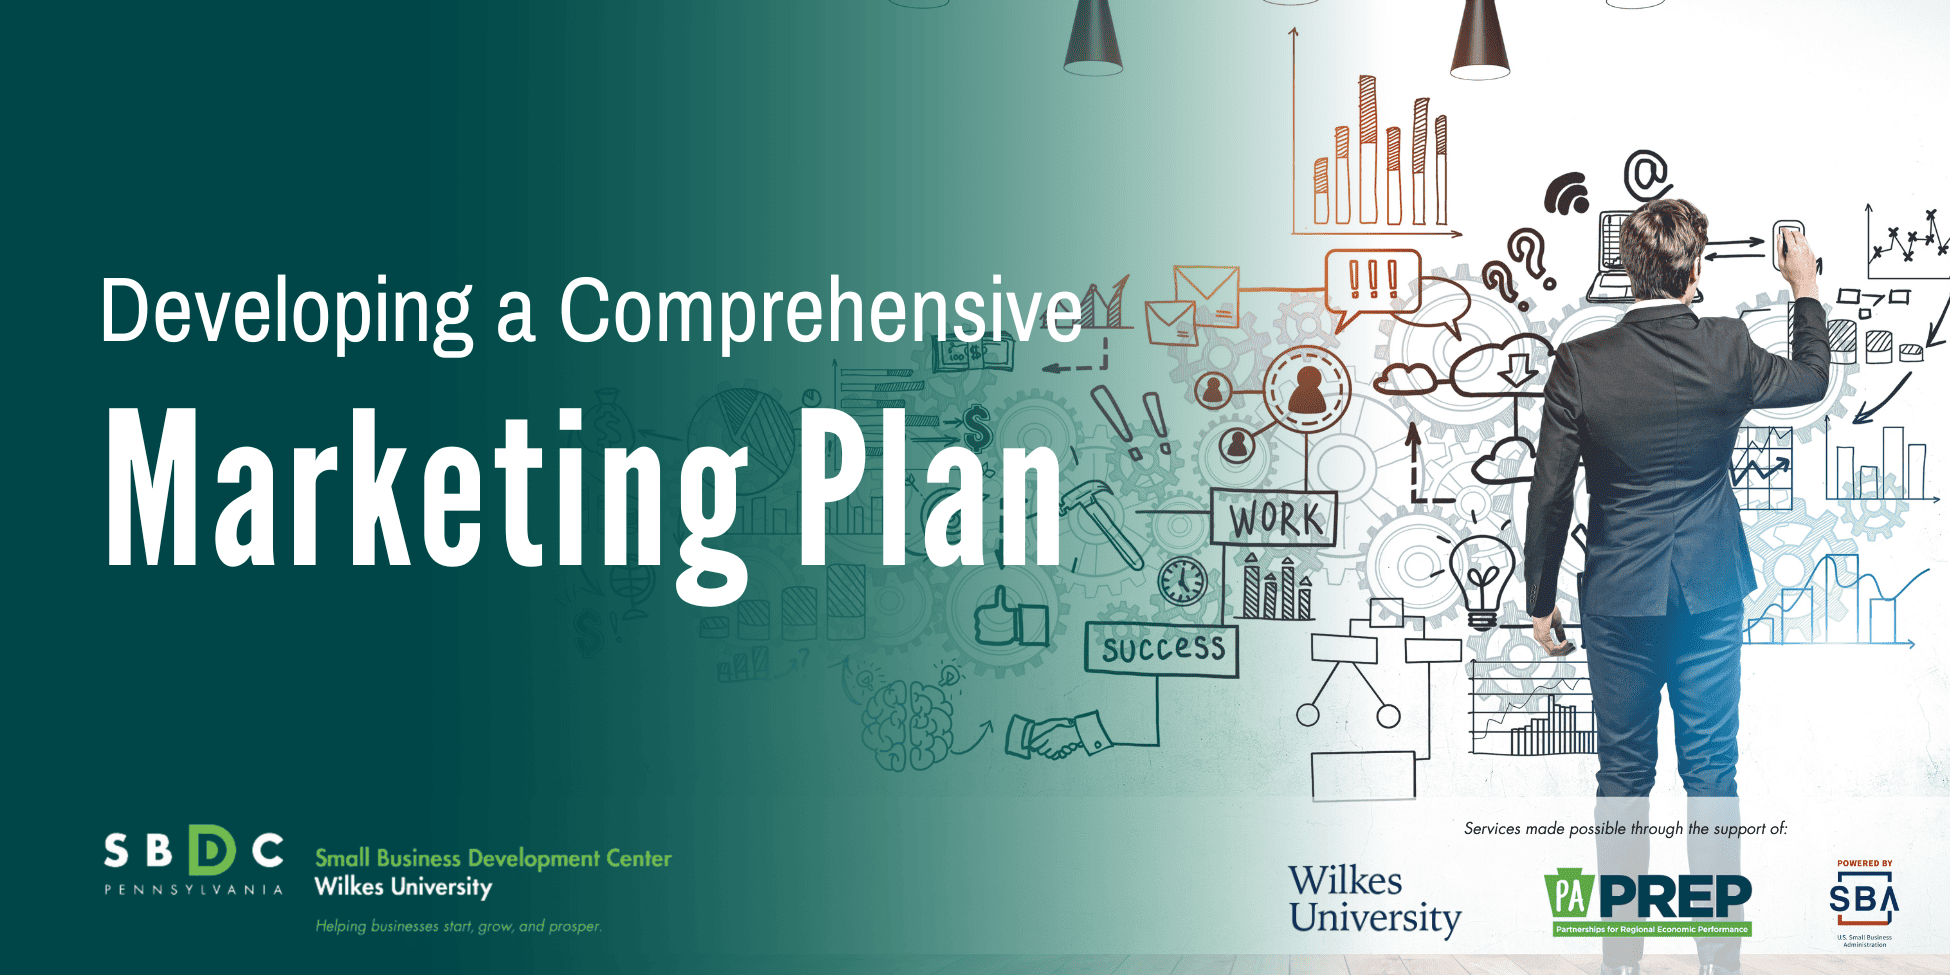 Developing a Comprehensive Marketing Plan